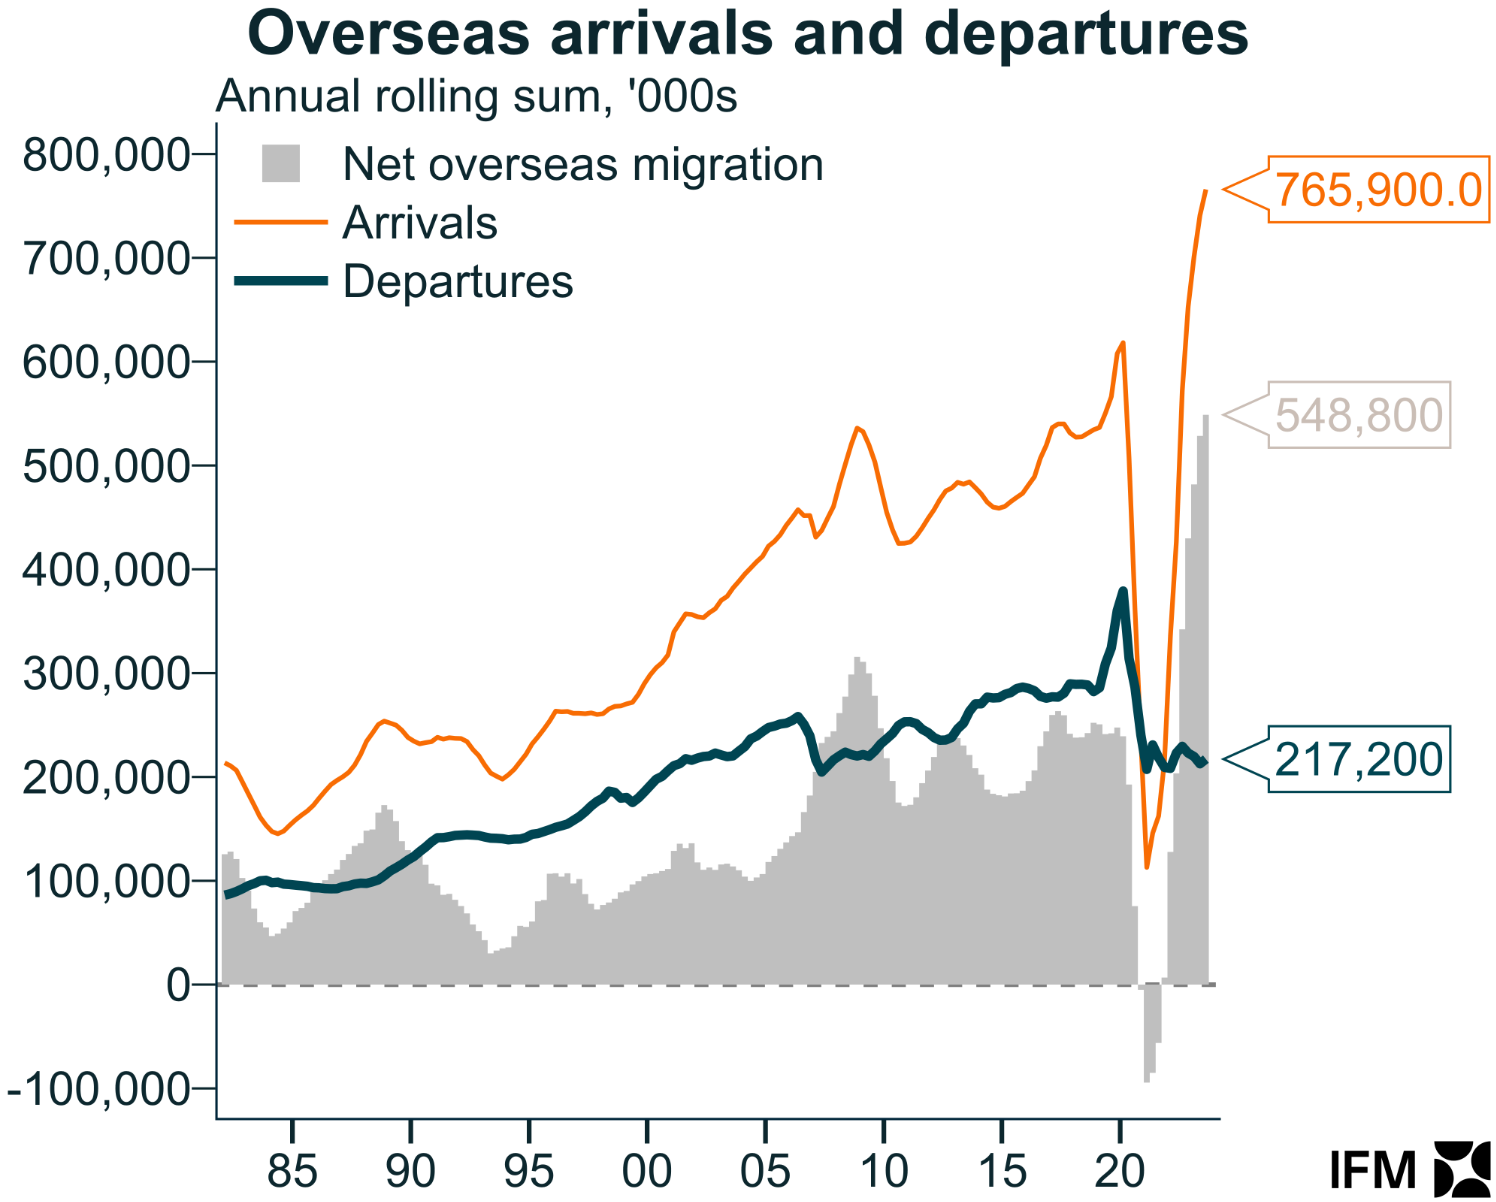 NOM arrivals and departures